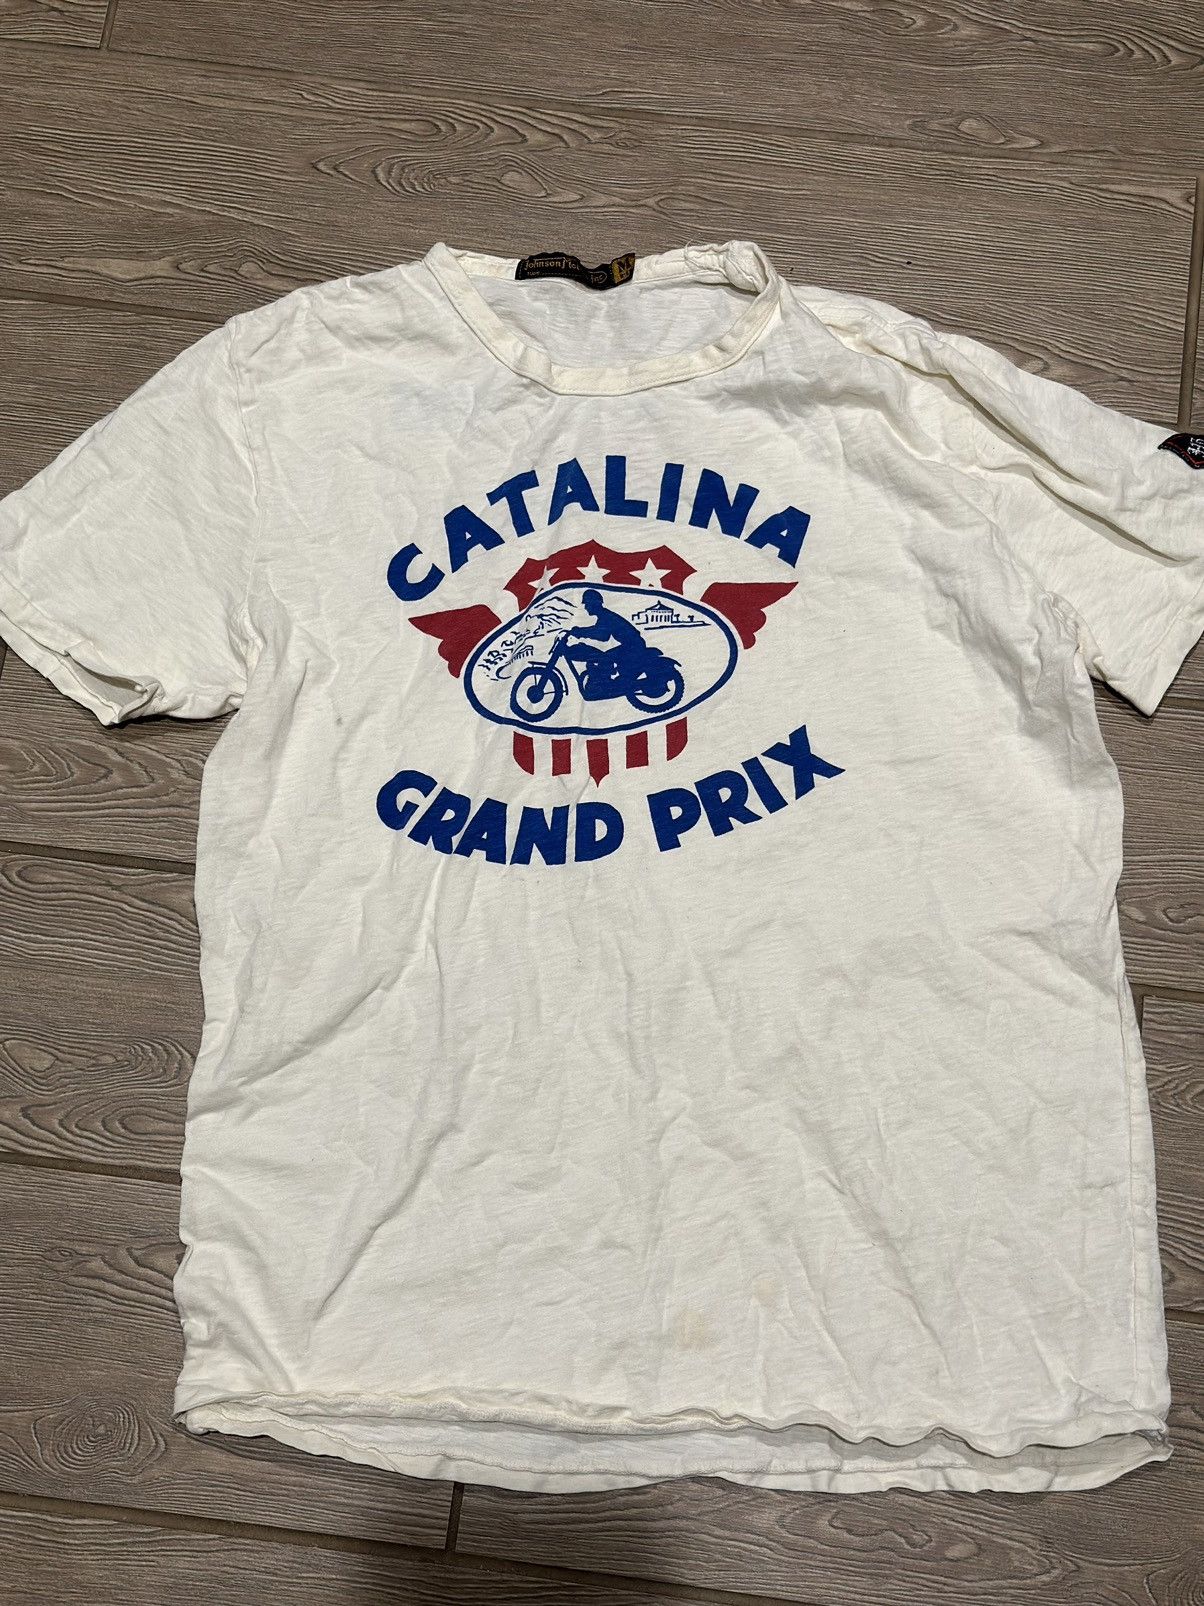 Vintage Vintage Catalina Grand Prix Tee Size US M / EU 48-50 / 2 - 1 Preview